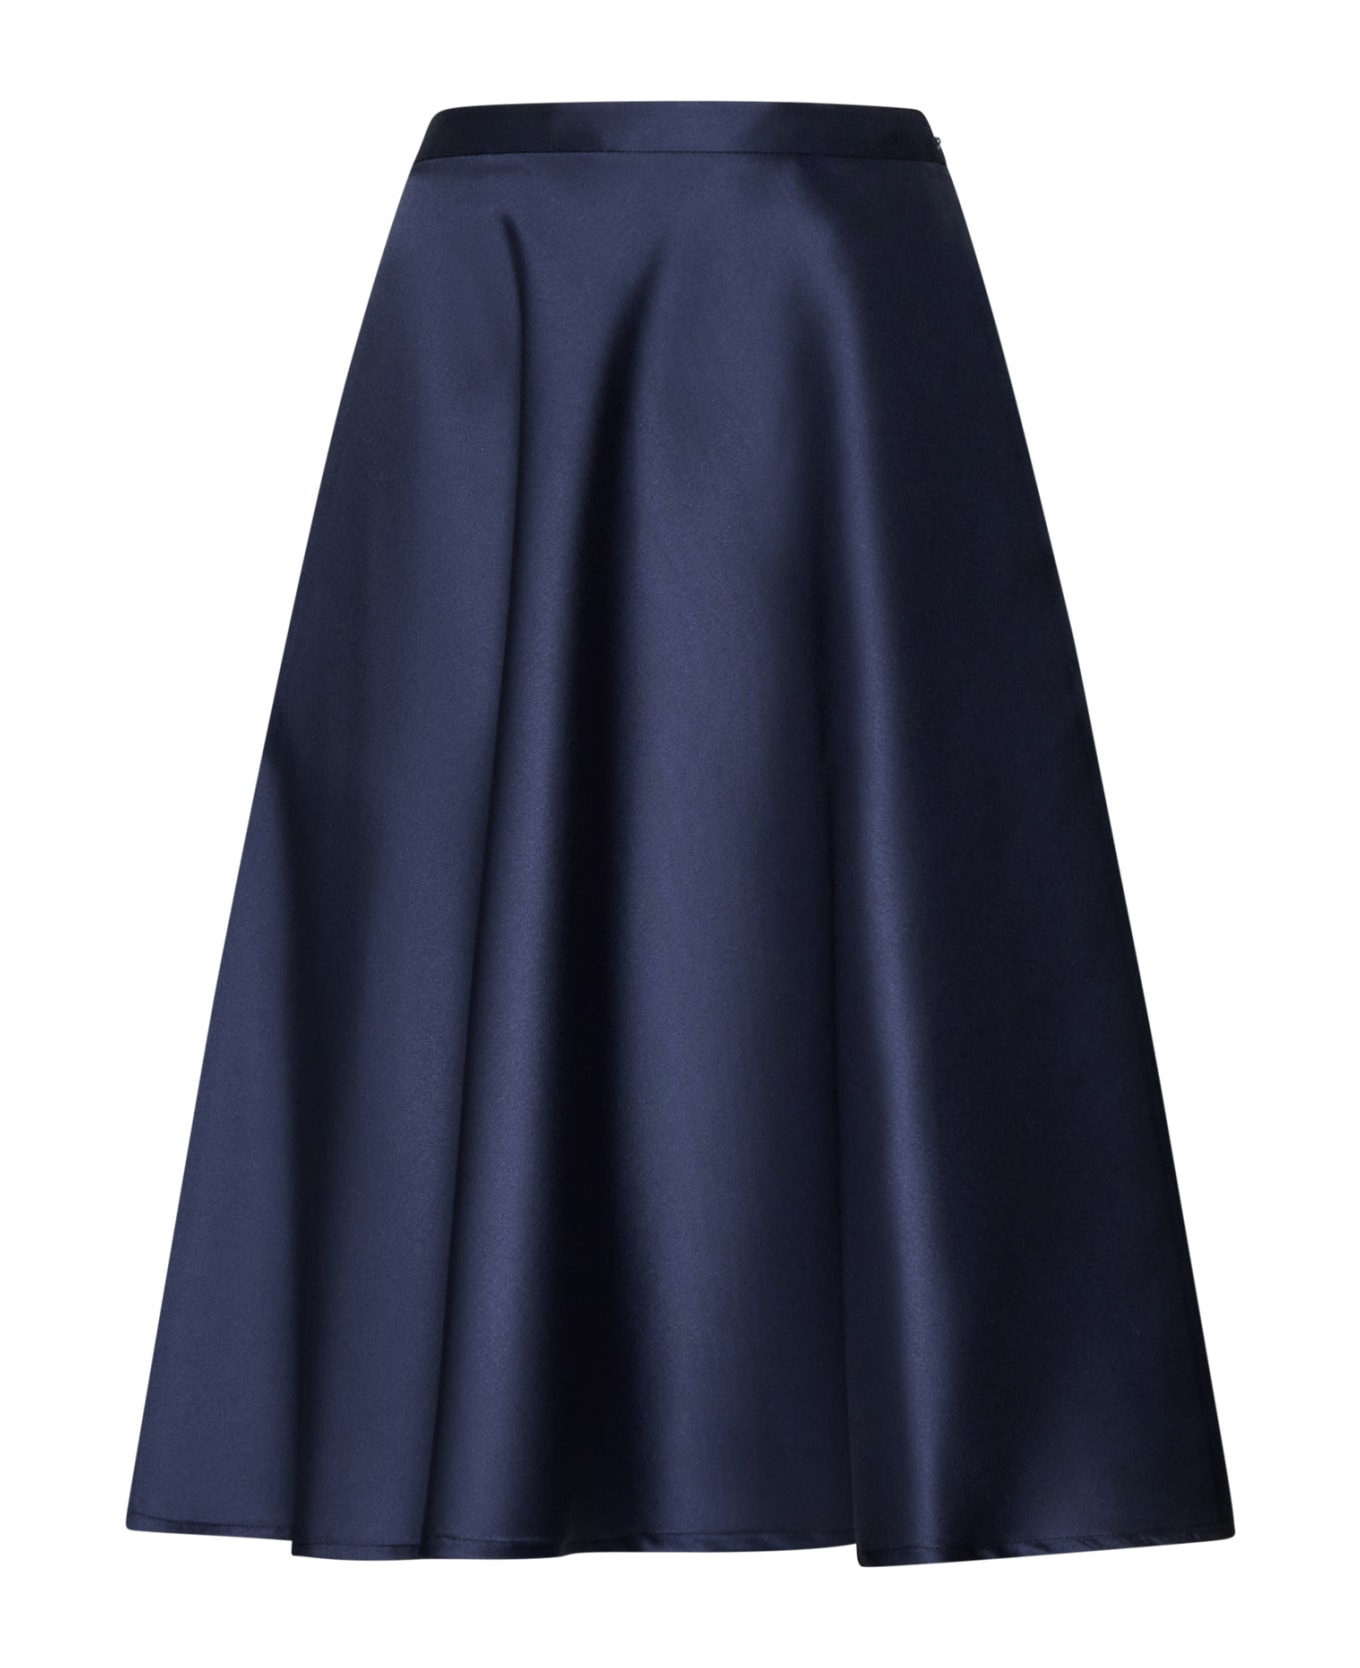 Blanca Vita Skirt - Navy スカート